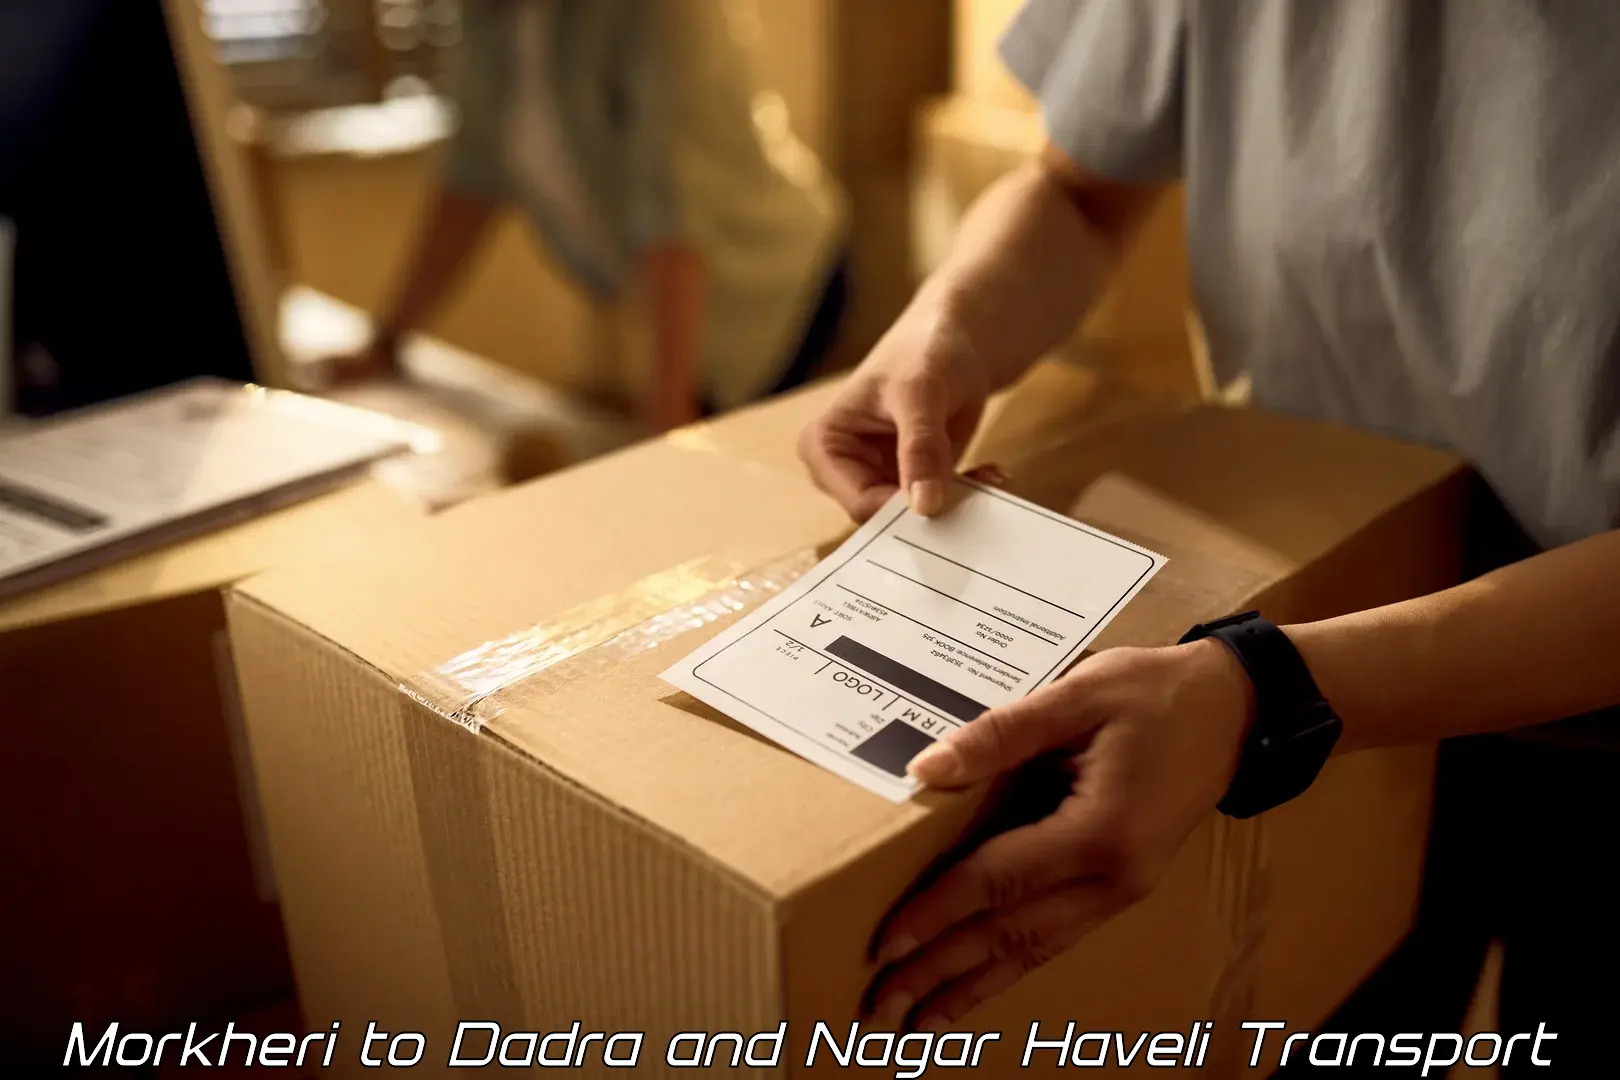 Truck transport companies in India Morkheri to Dadra and Nagar Haveli